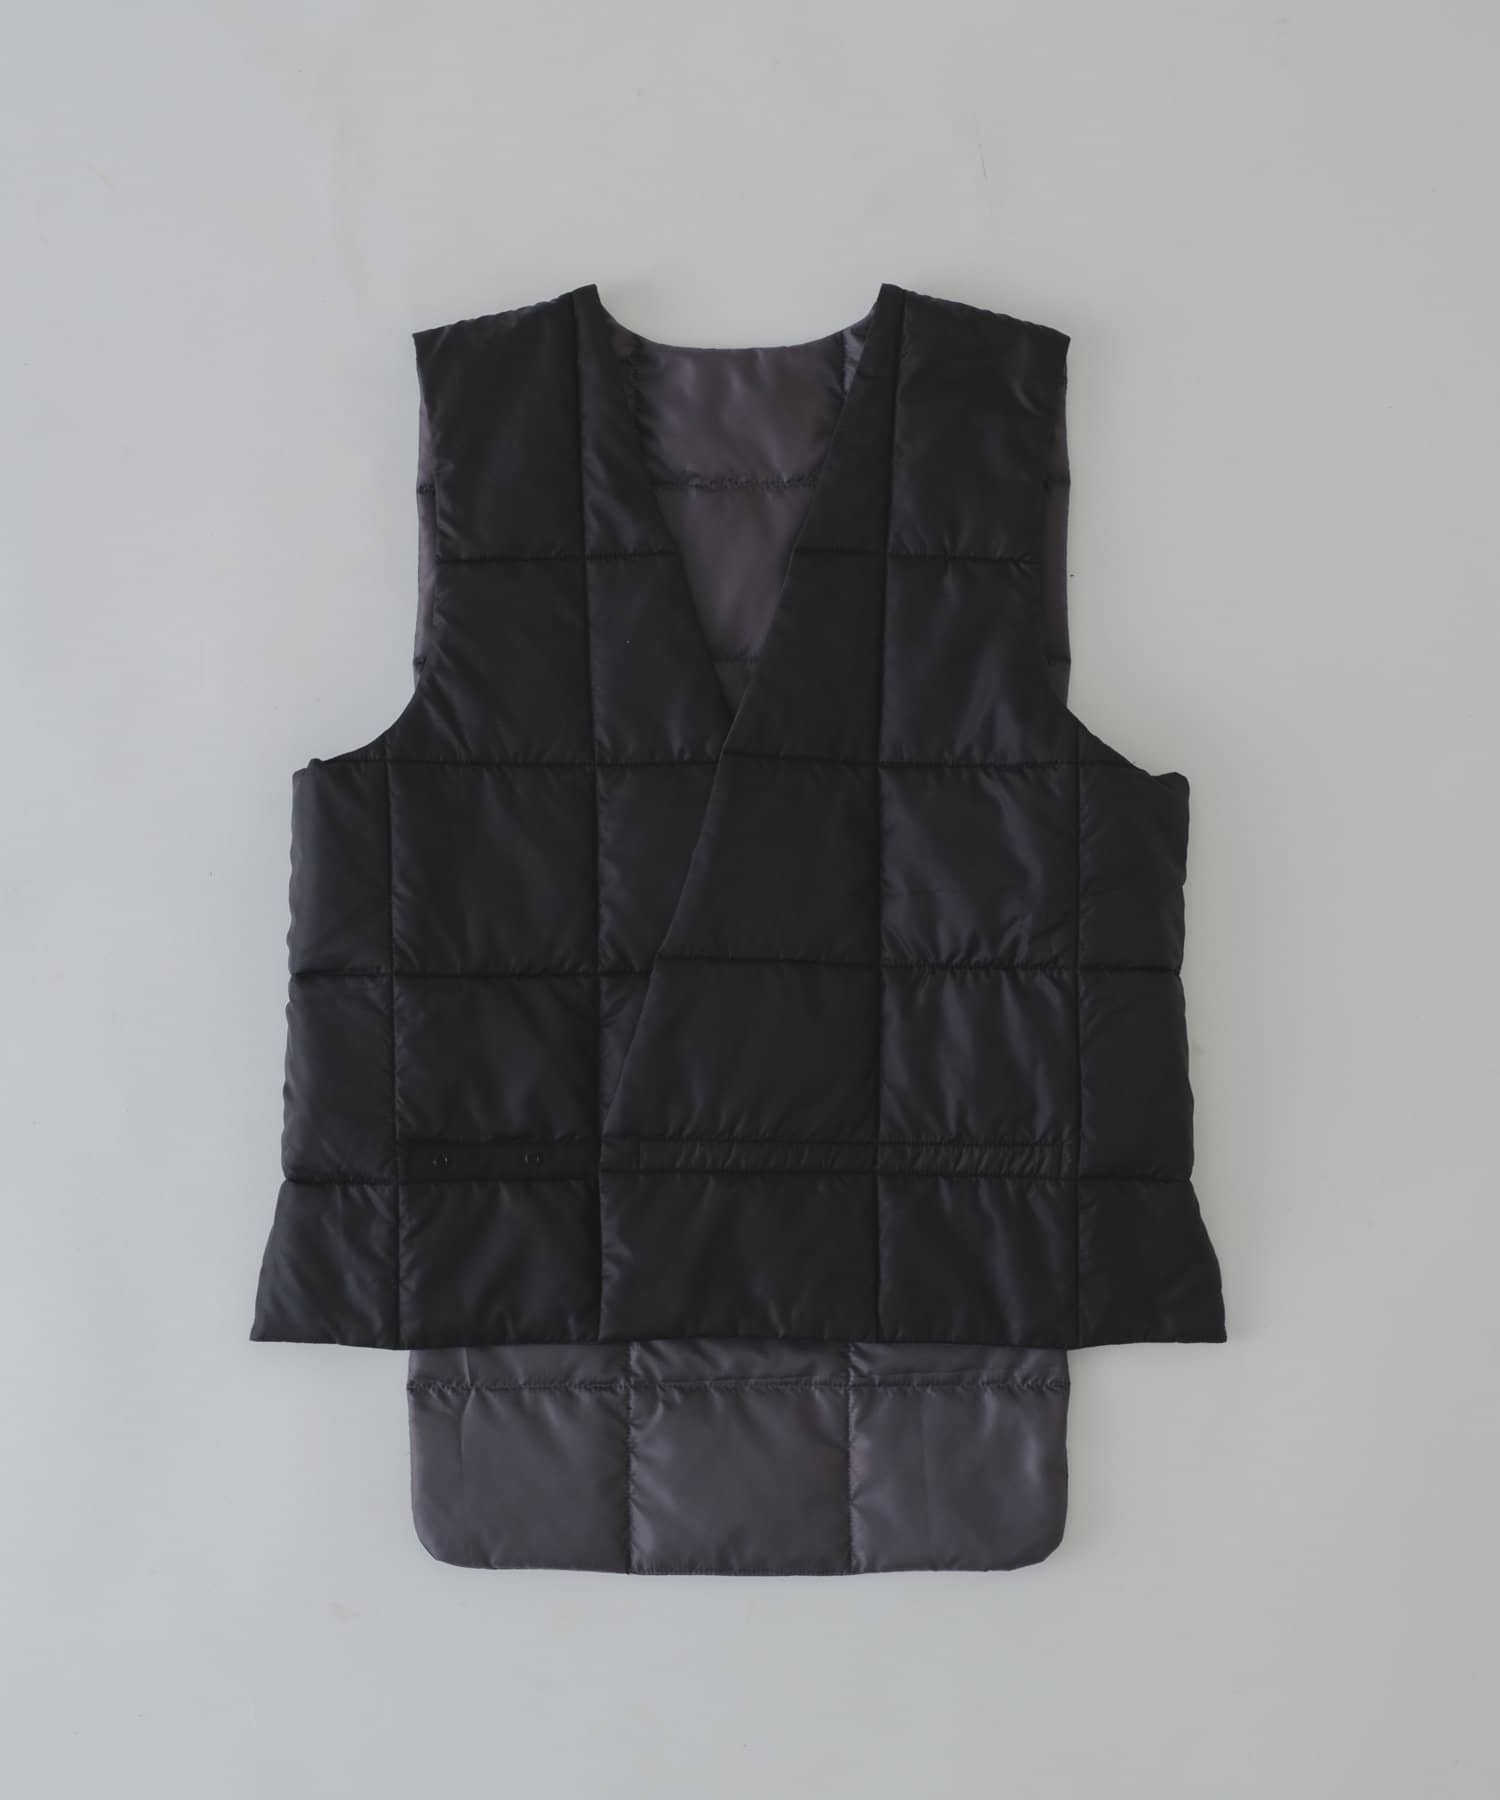 Pasterip(パセリ) Insulation inner vest